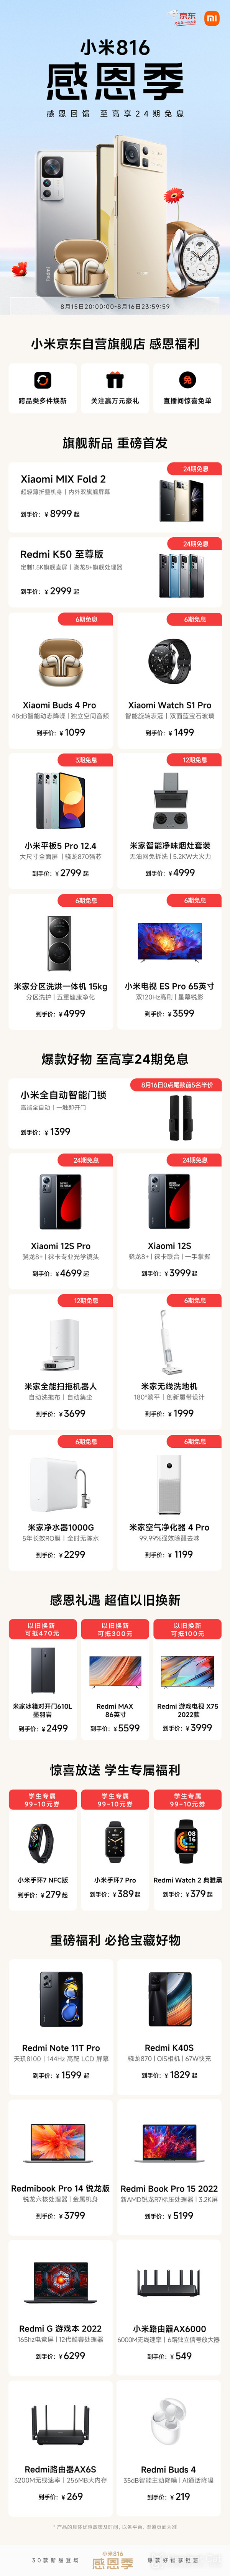 Xiaomi 816 थैंक्सगिविंग सीज़न लाभ सूची, 24 ब्याज-मुक्त अवधि तक!